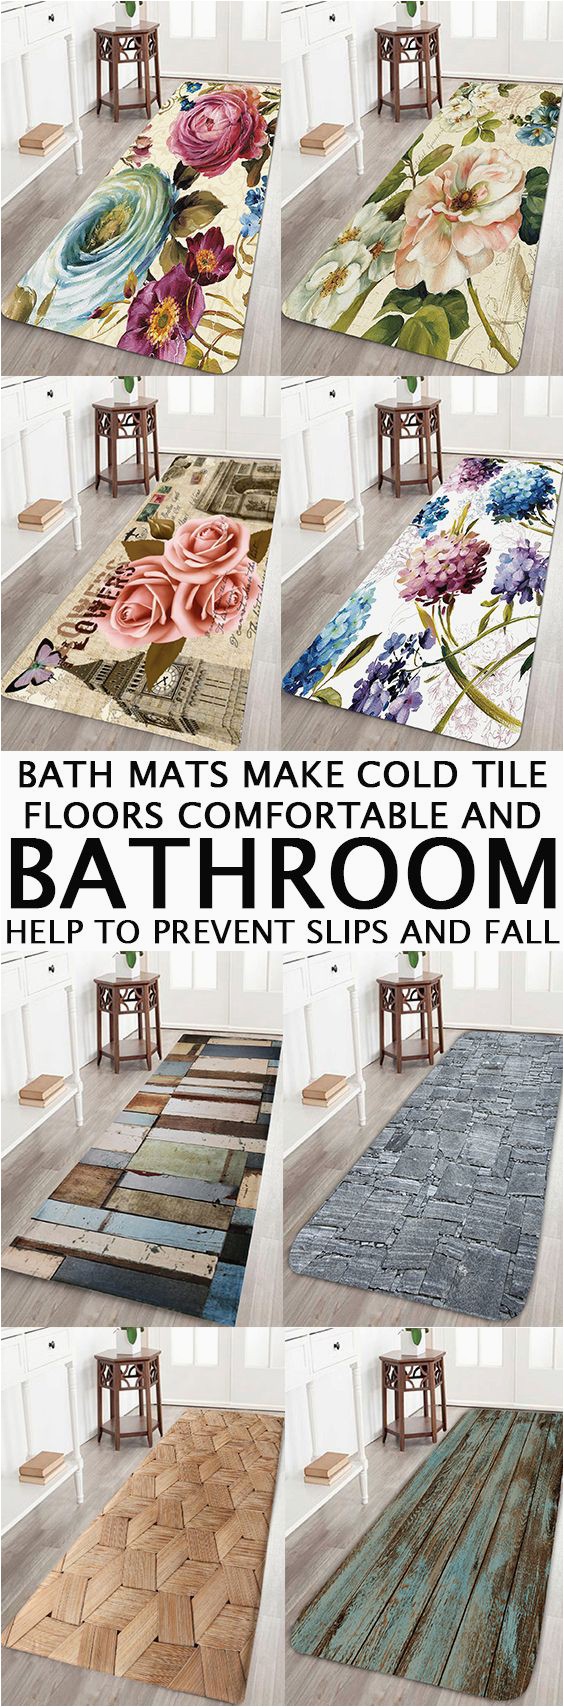 Fall Bathroom Rug Sets Bath Rugs are Essential Bath Mats Make Cold Tile Floors